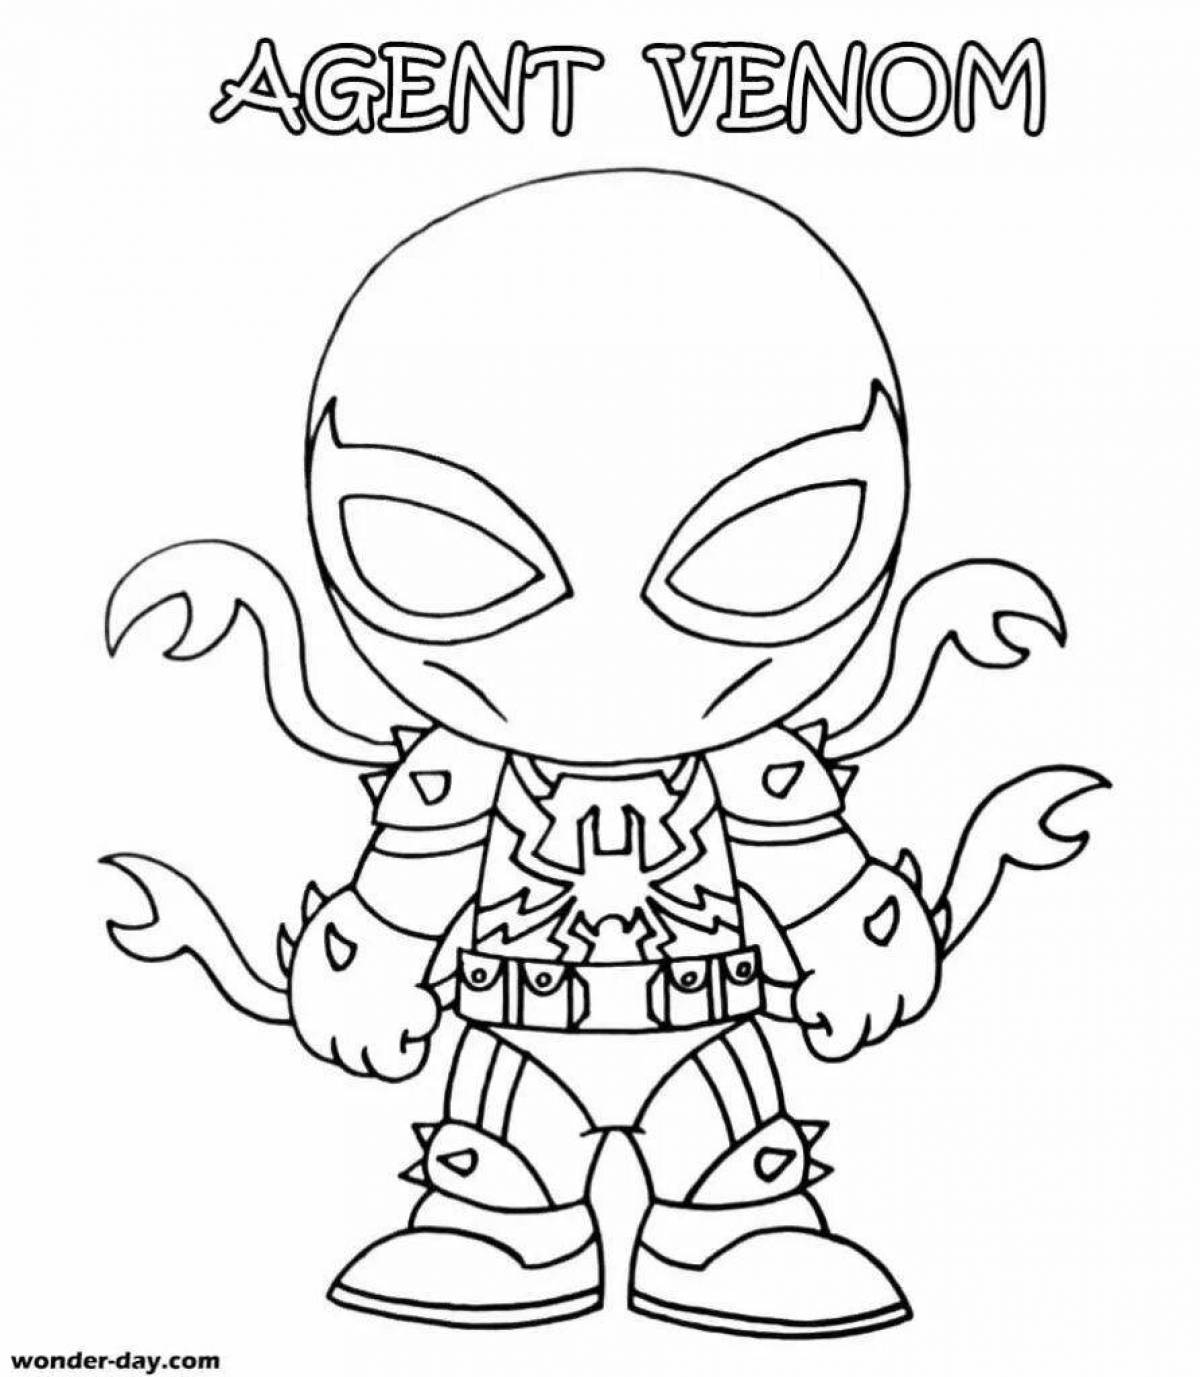 Dazzling venom coloring book for boys